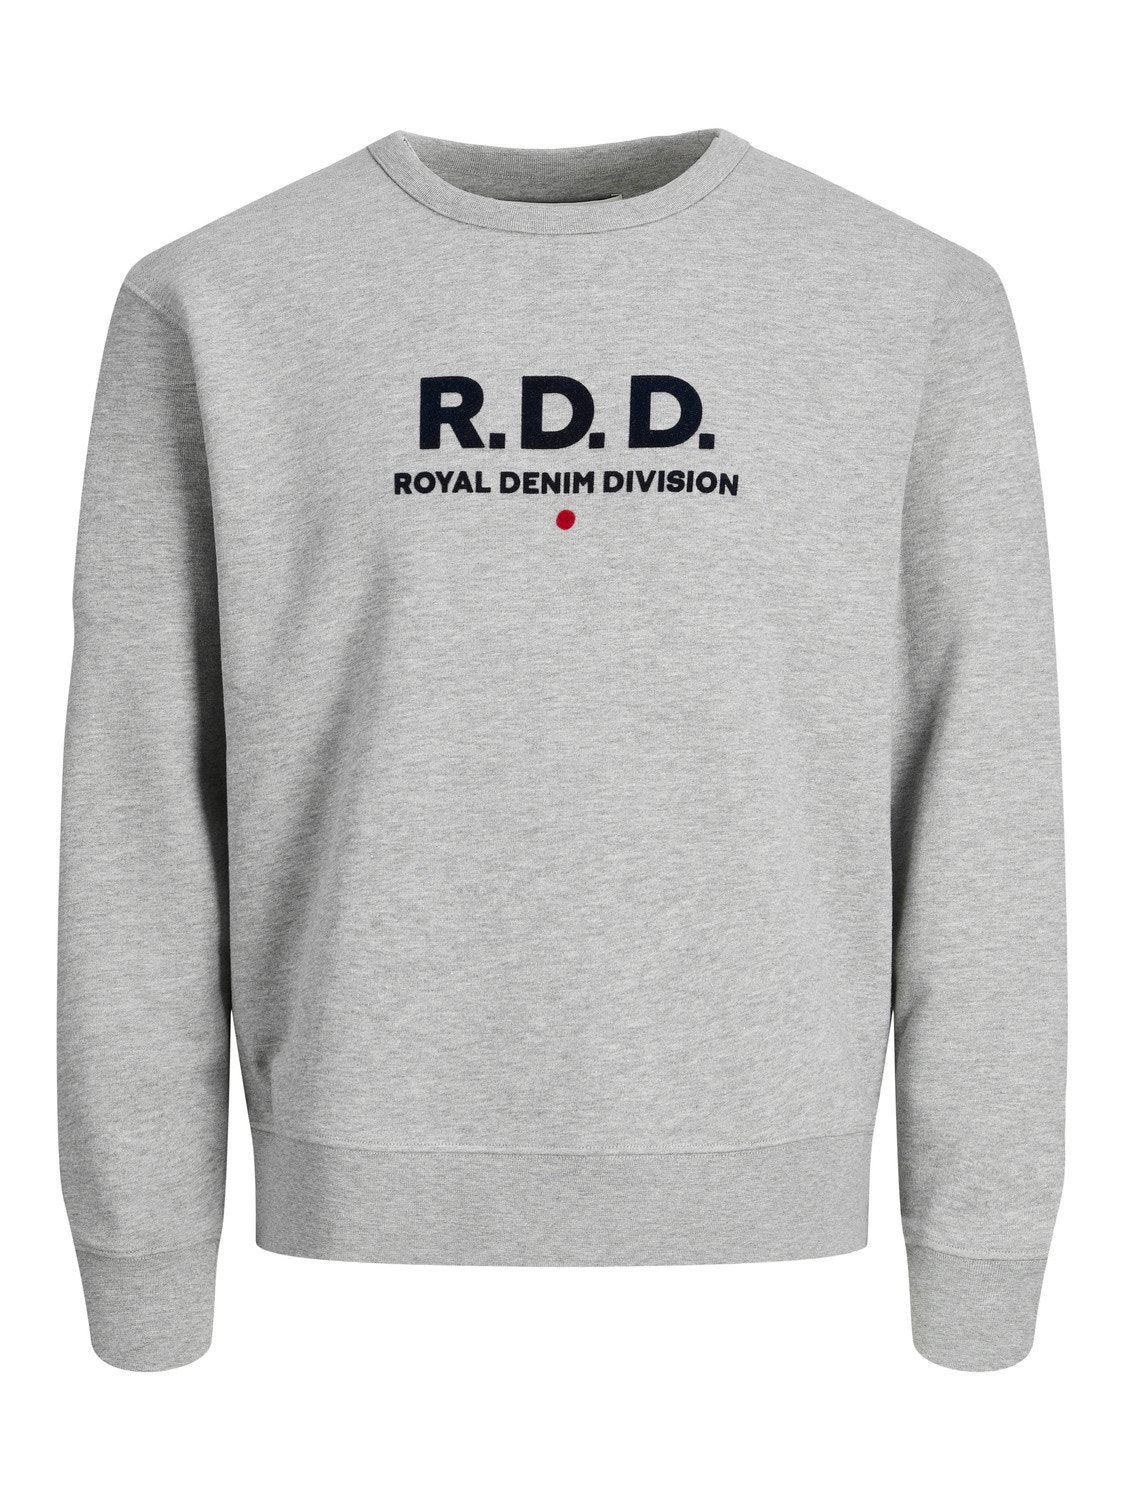 Jack & Jones RDD Logo Crewn Neck Sweatshirt -Light Grey Melange - 12232808